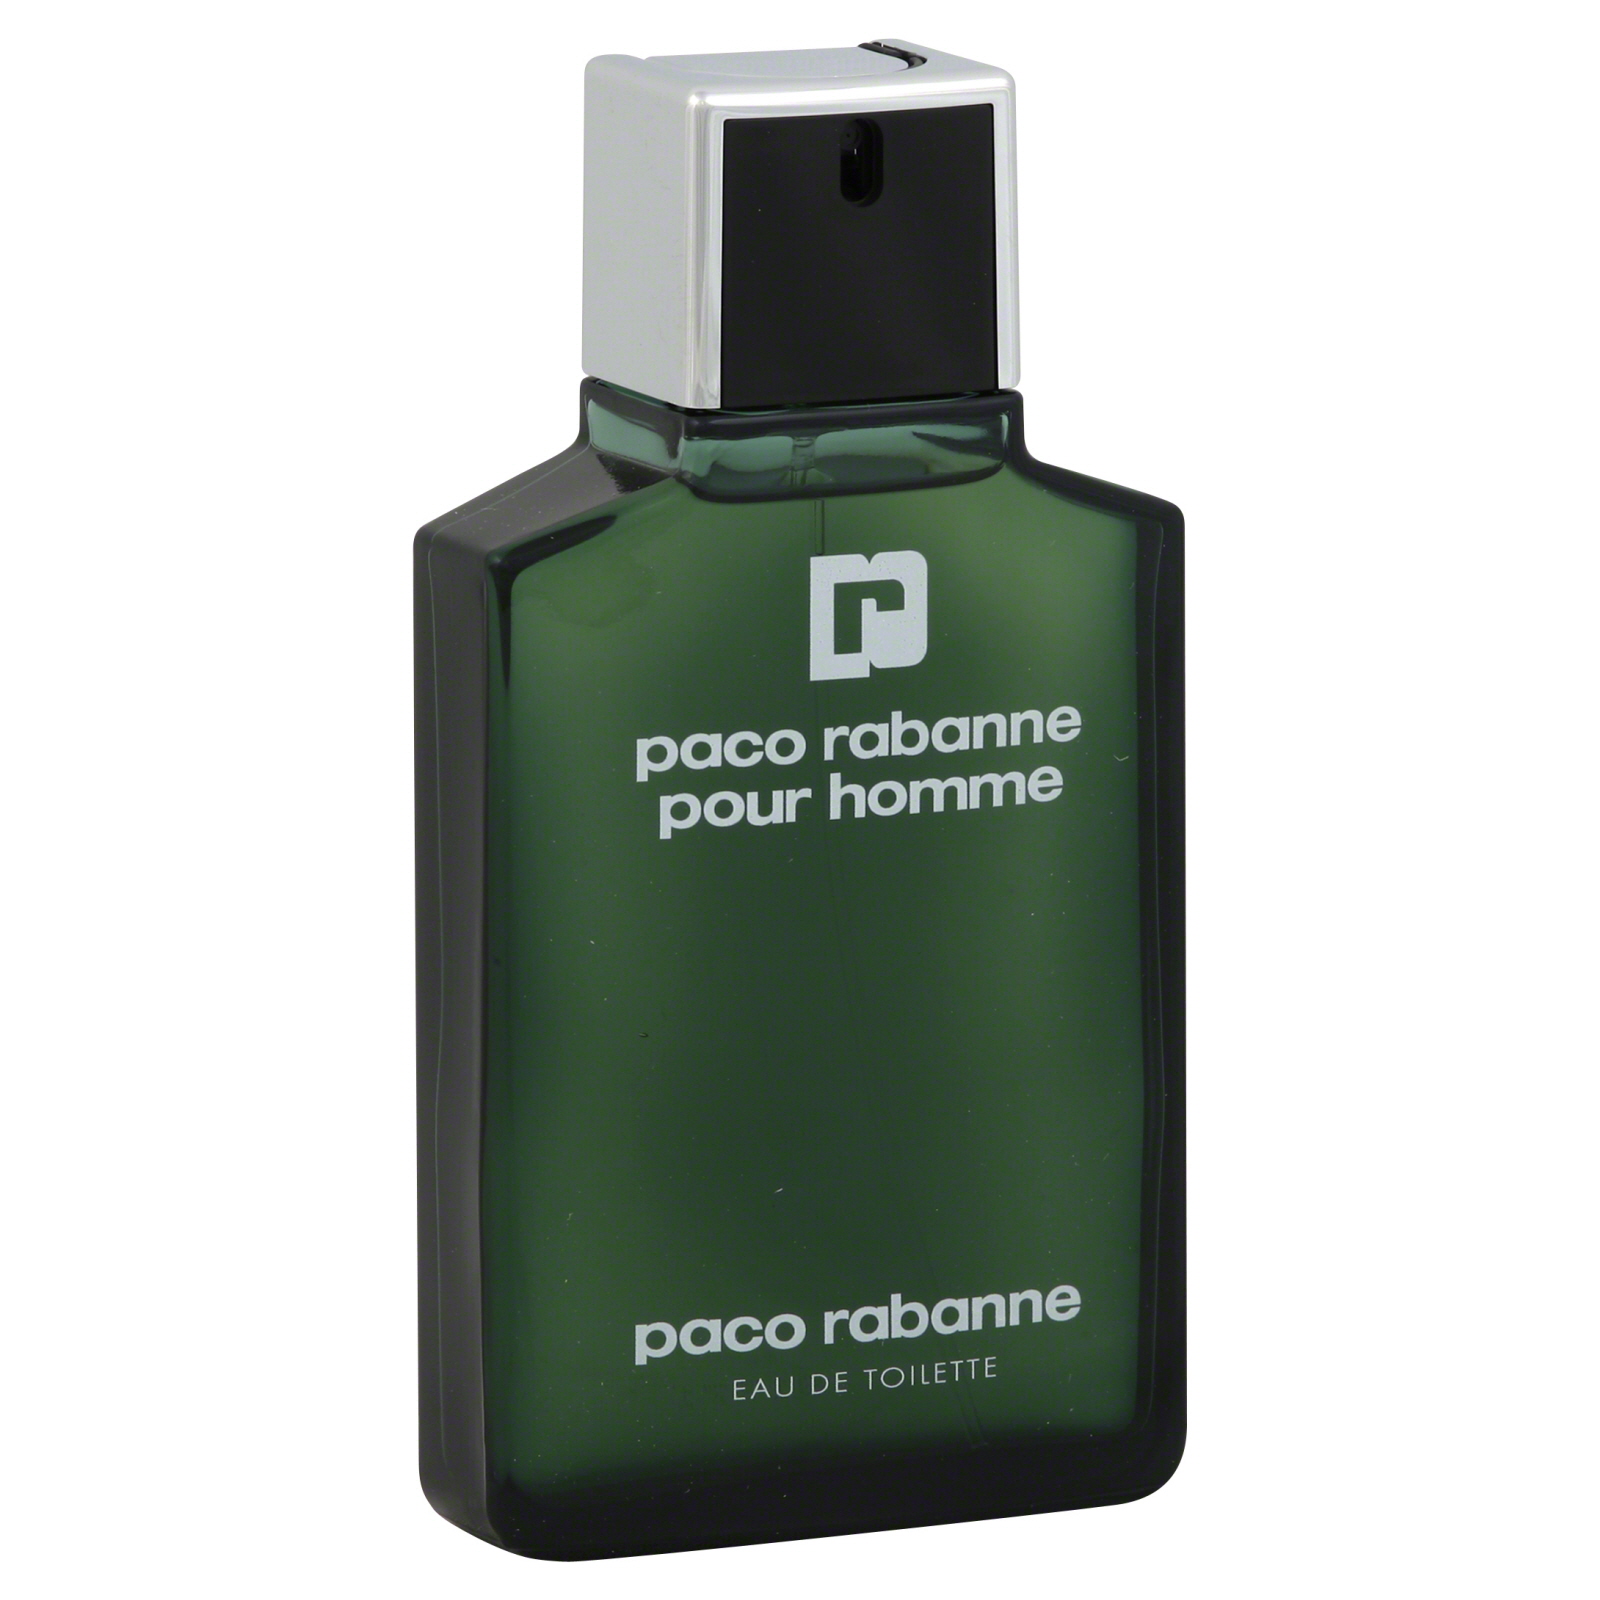 Paco rabanne homme. Paco Rabanne pour homme Eau копия. Paco Rabanne мужские pour Home. Paco Rabanne pour homme EDT 100ml. Original Vetiver Paco Rabanne.